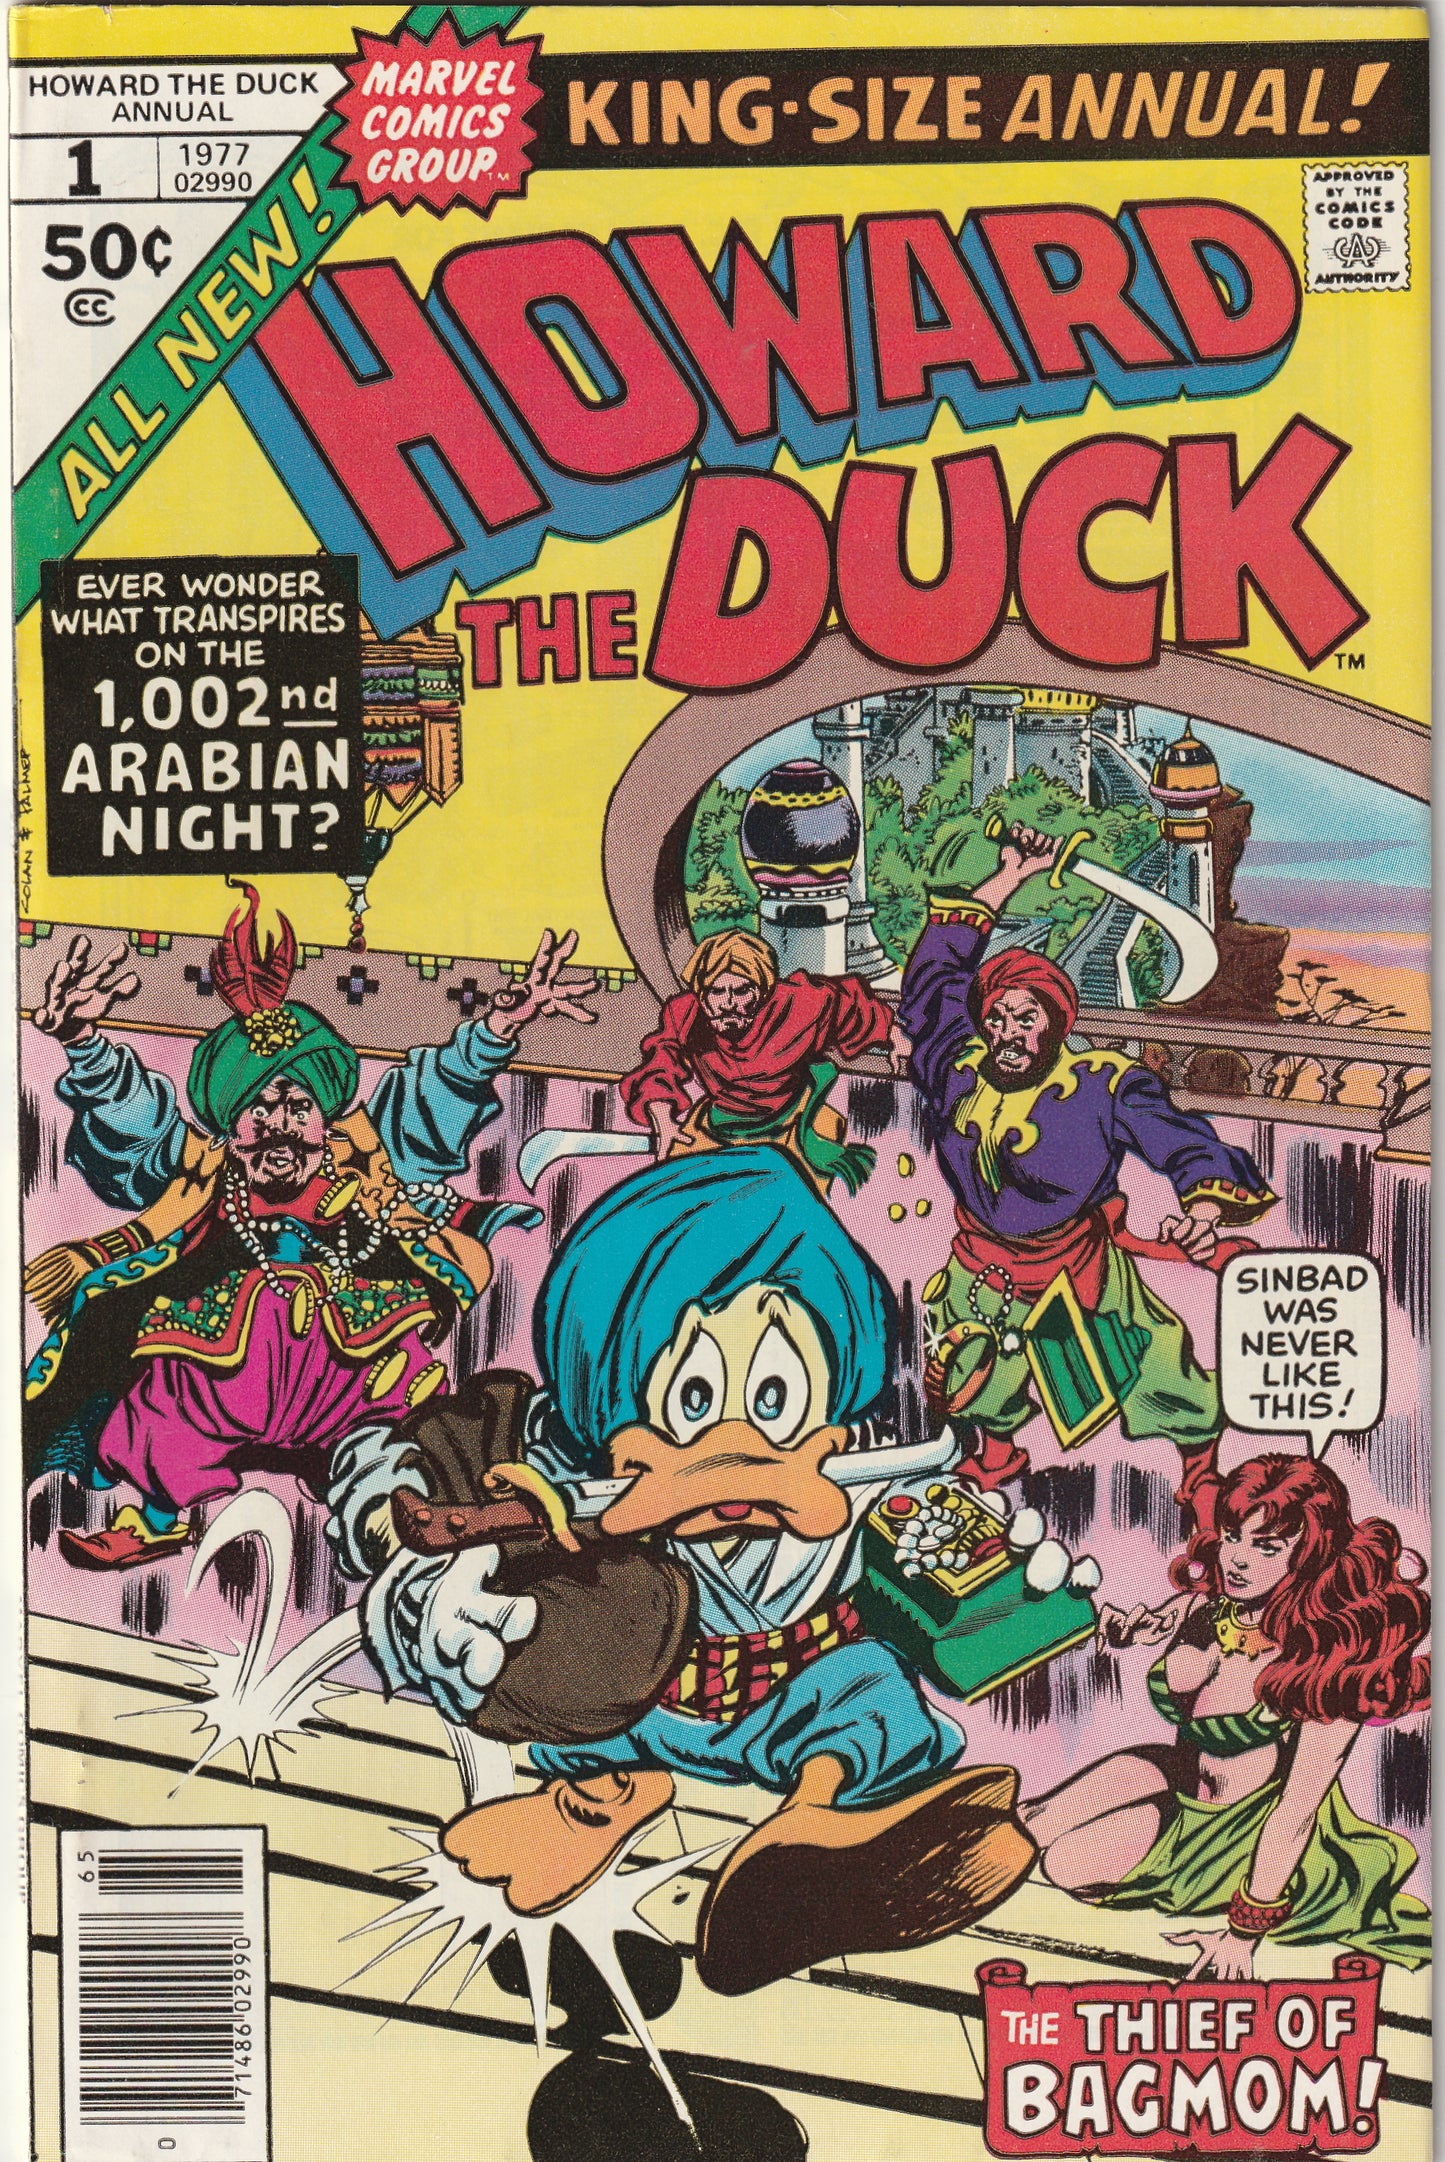 Howard the Duck Annual #1 (1971)